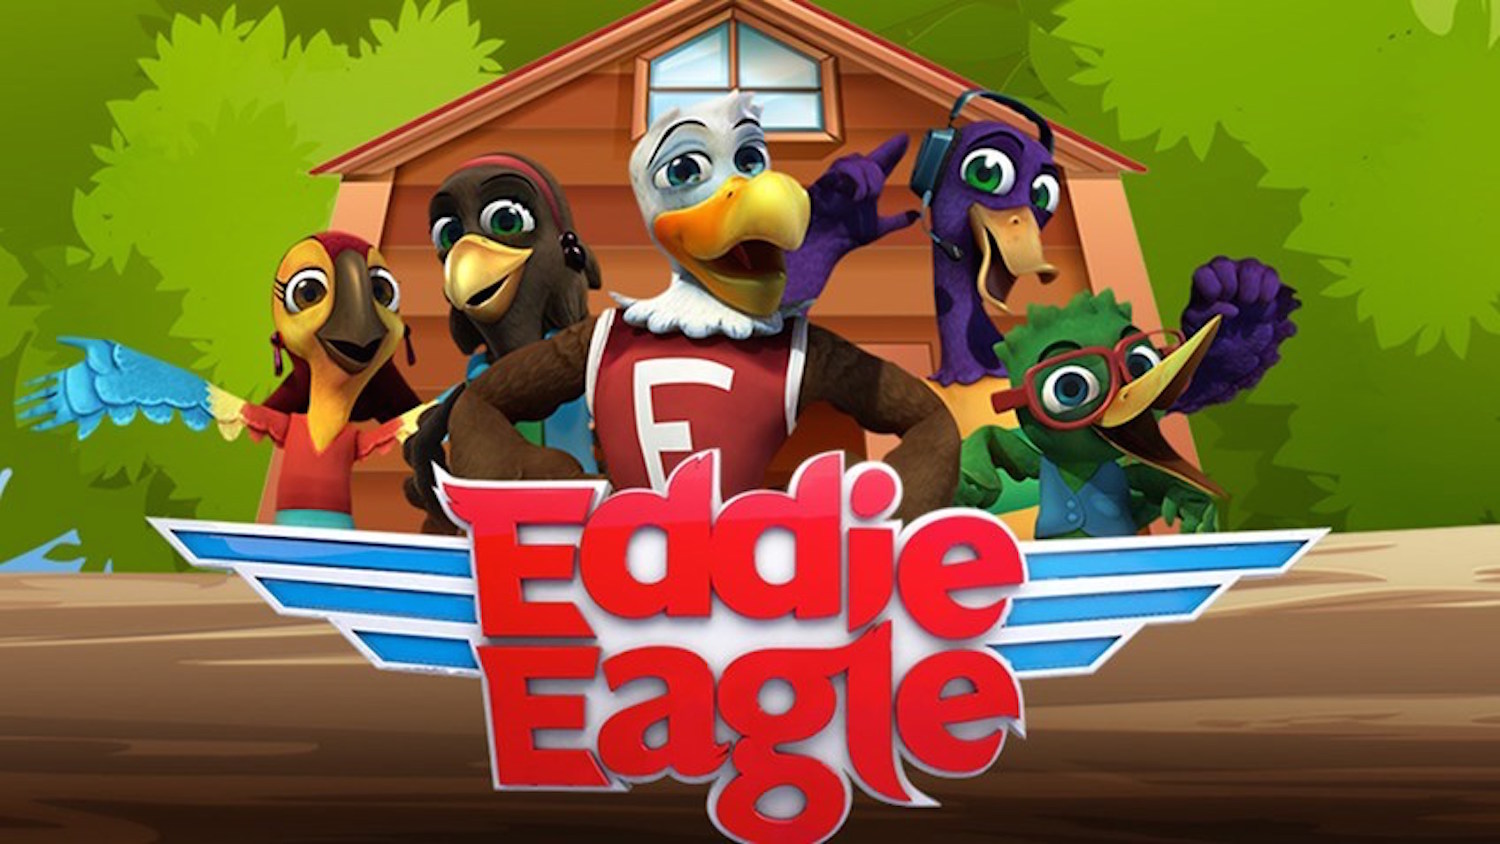 Eddie Eagle Wraps Up Awesome 2017